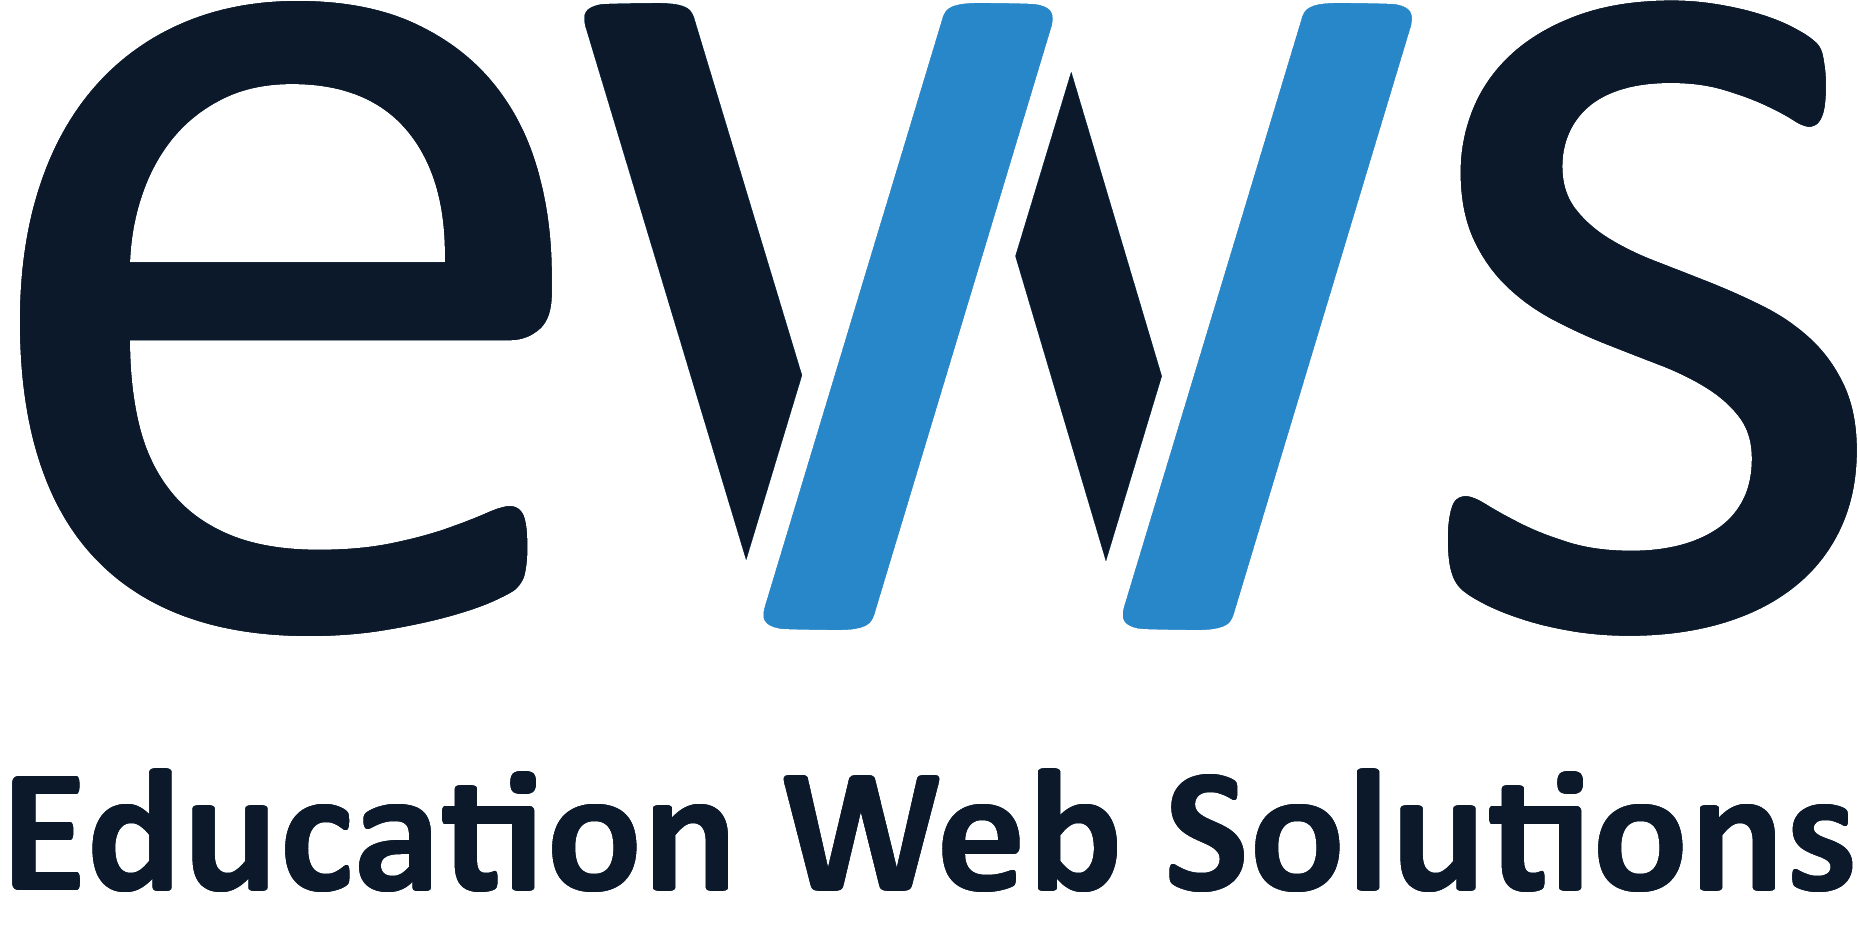 Education Web Solutions logo